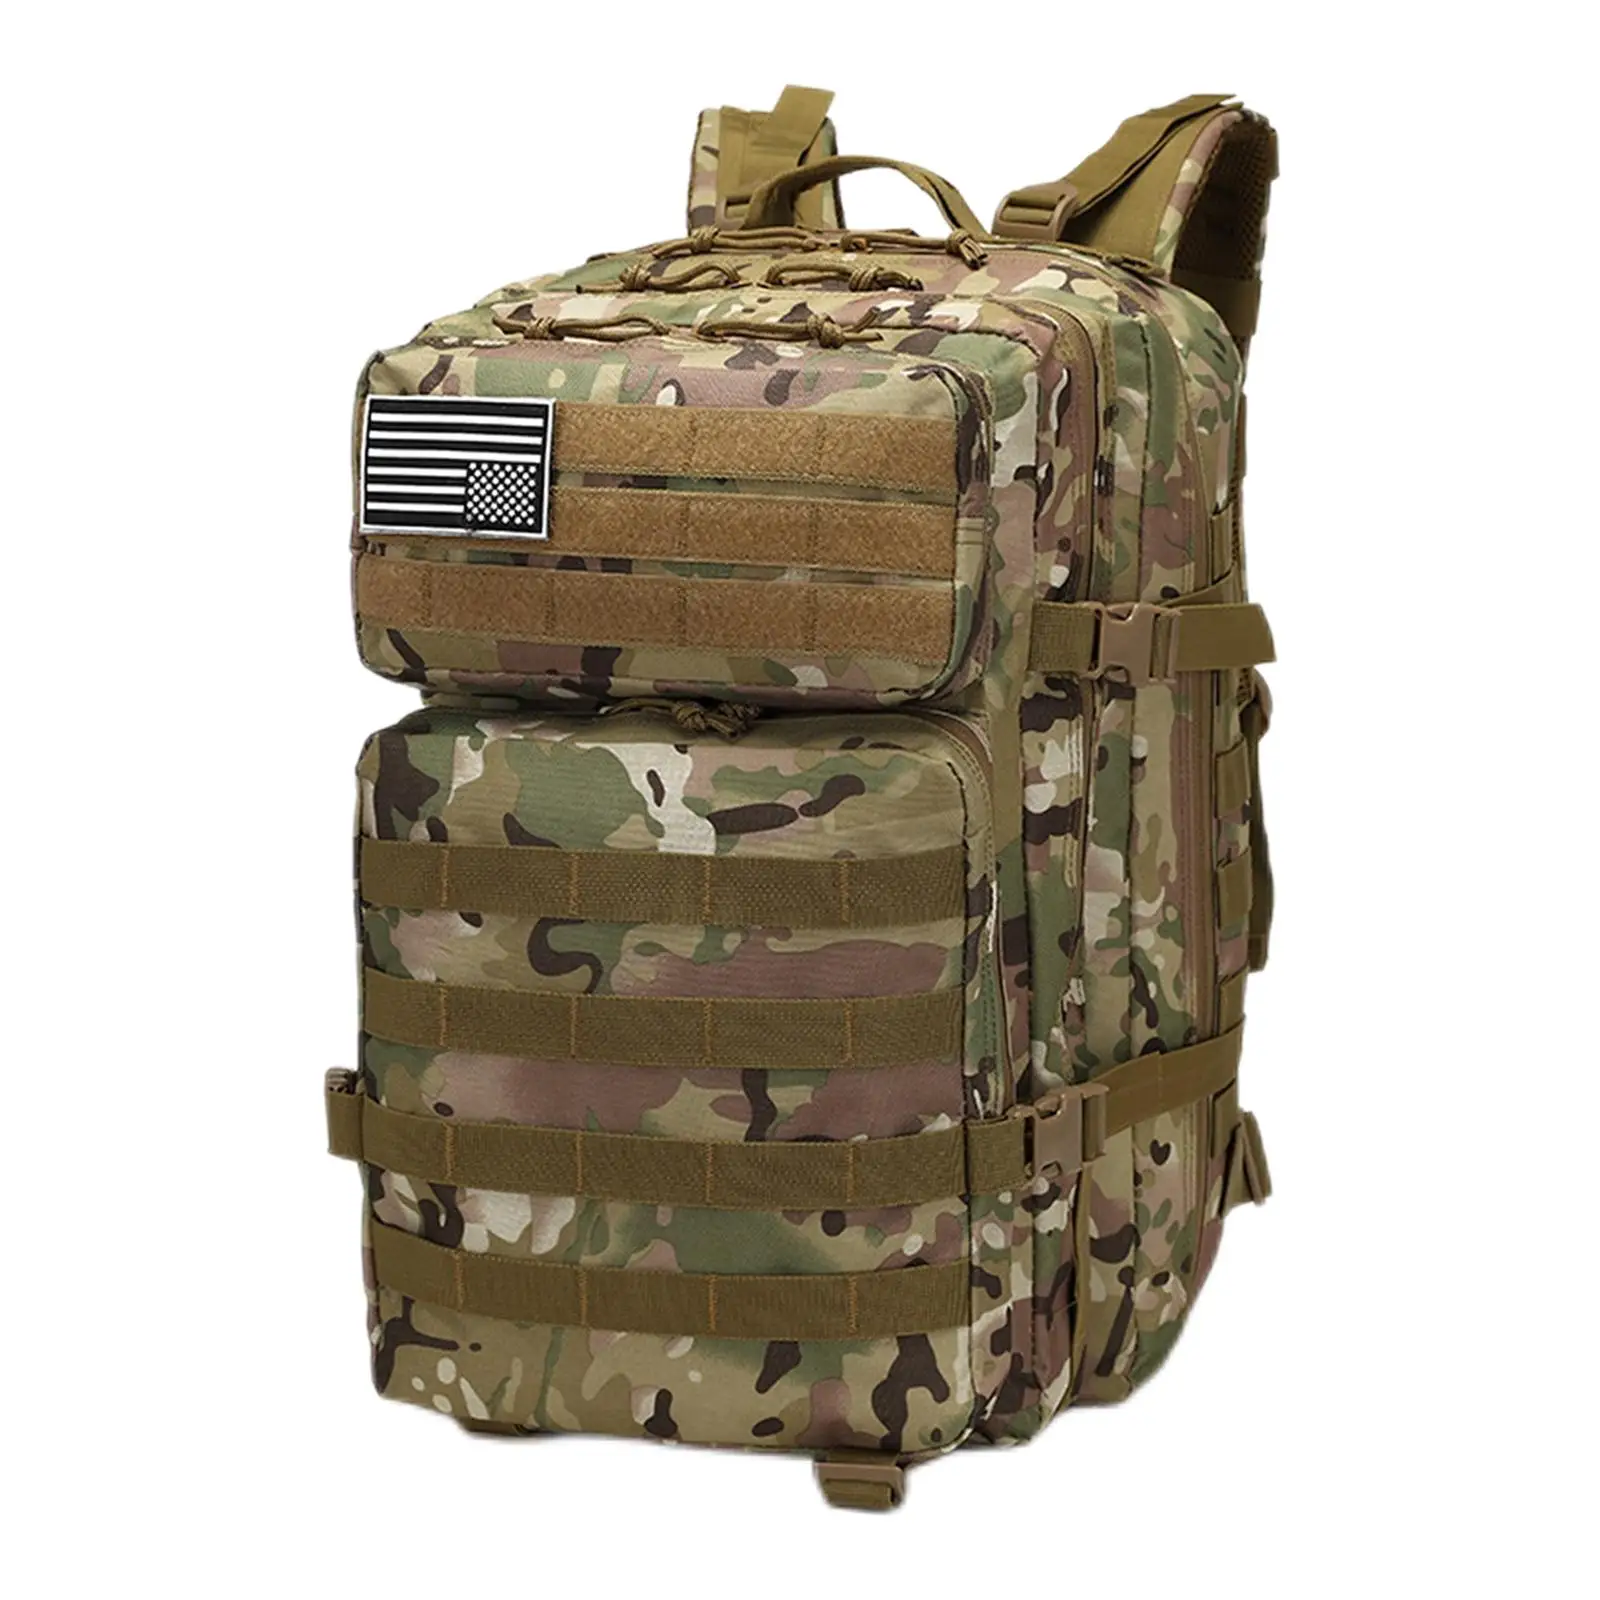 Large Tactical Backpack Hiking Rucksack Day Pack Bag Waterproof Adjustable Backpack for Travel Camping Hunting Trekking Outdoor